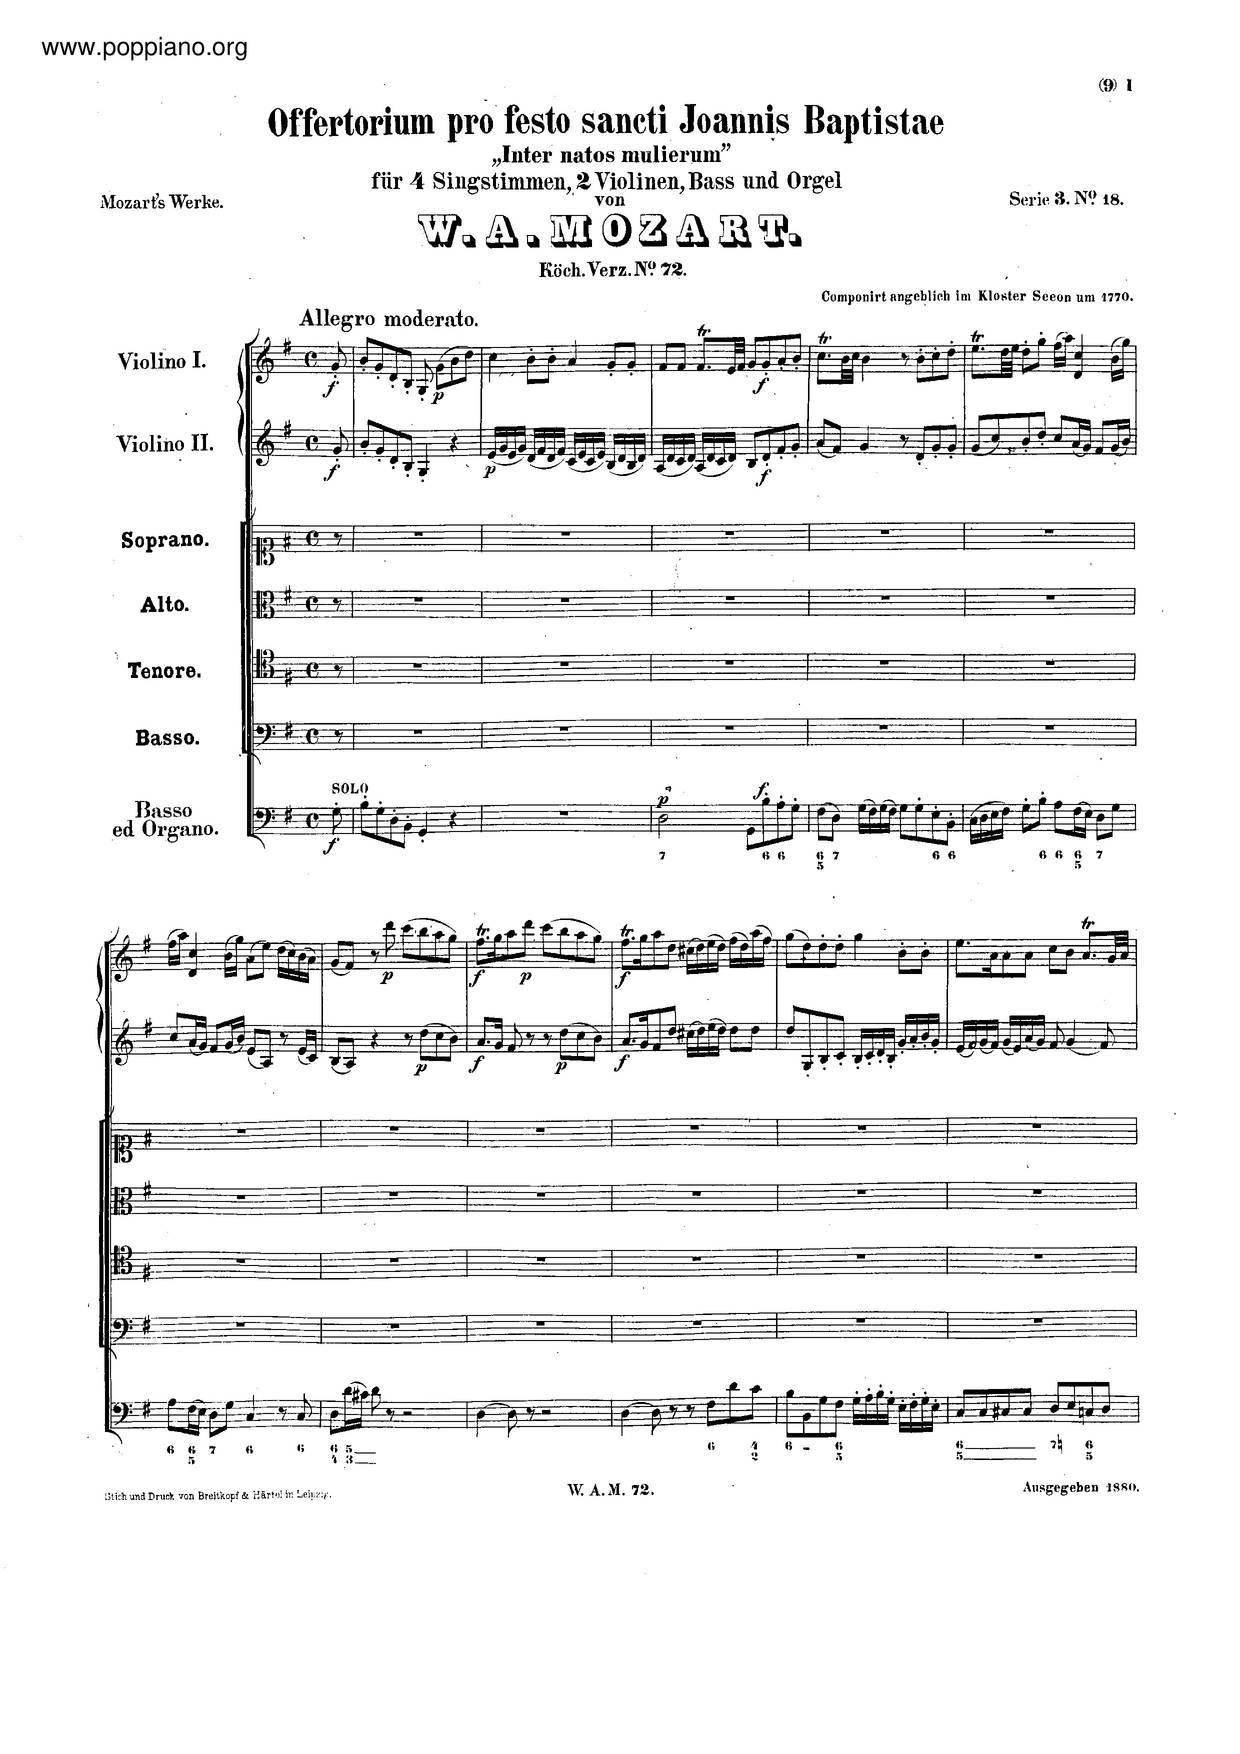 Inter Natos Mulierum, K. 72/74F琴譜